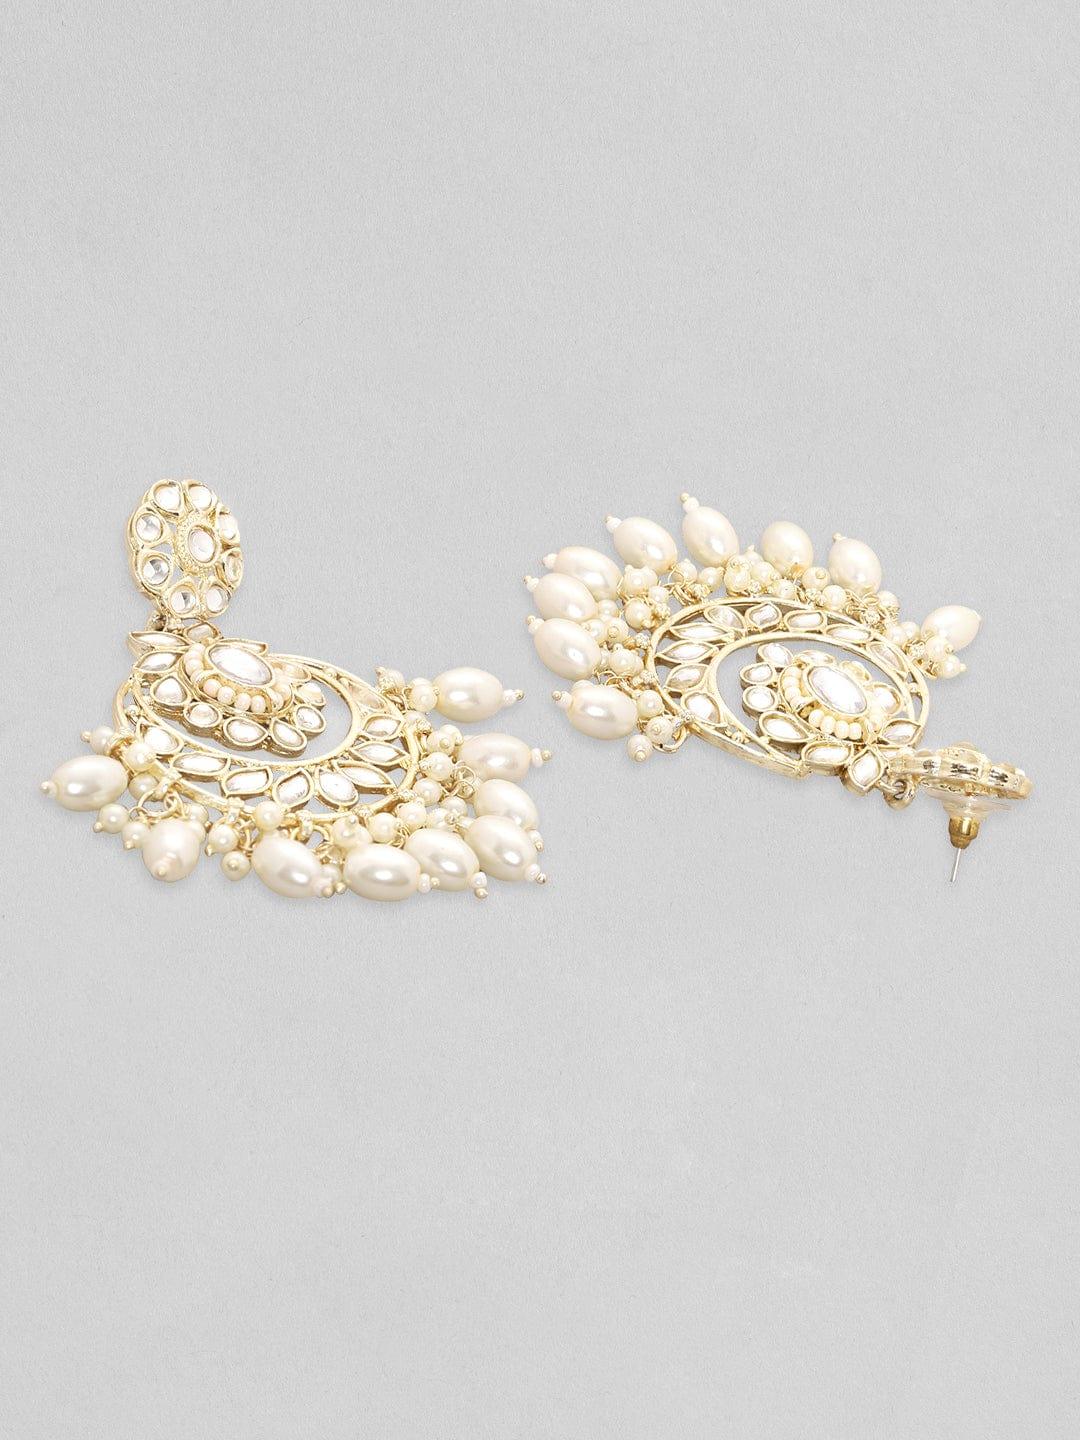 Rubans 22K Gold Plated Kundan Studded Pearl Necklace & Earring Jewellery Set. - Indiakreations